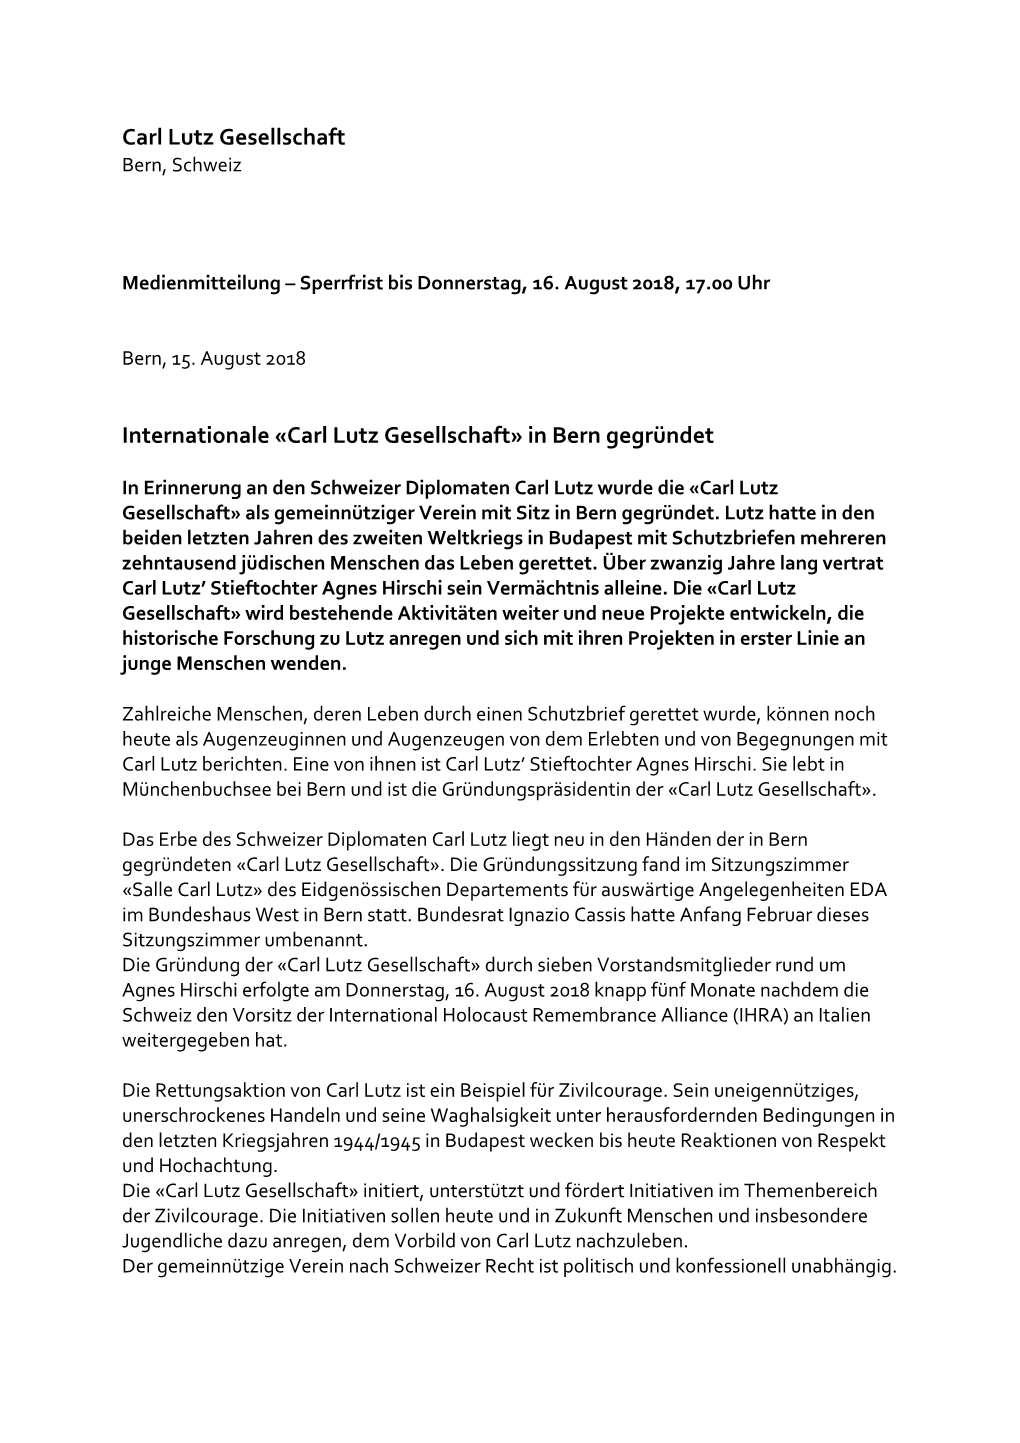 Carl Lutz Gesellschaft Internationale «Carl Lutz Gesellschaft» in Bern